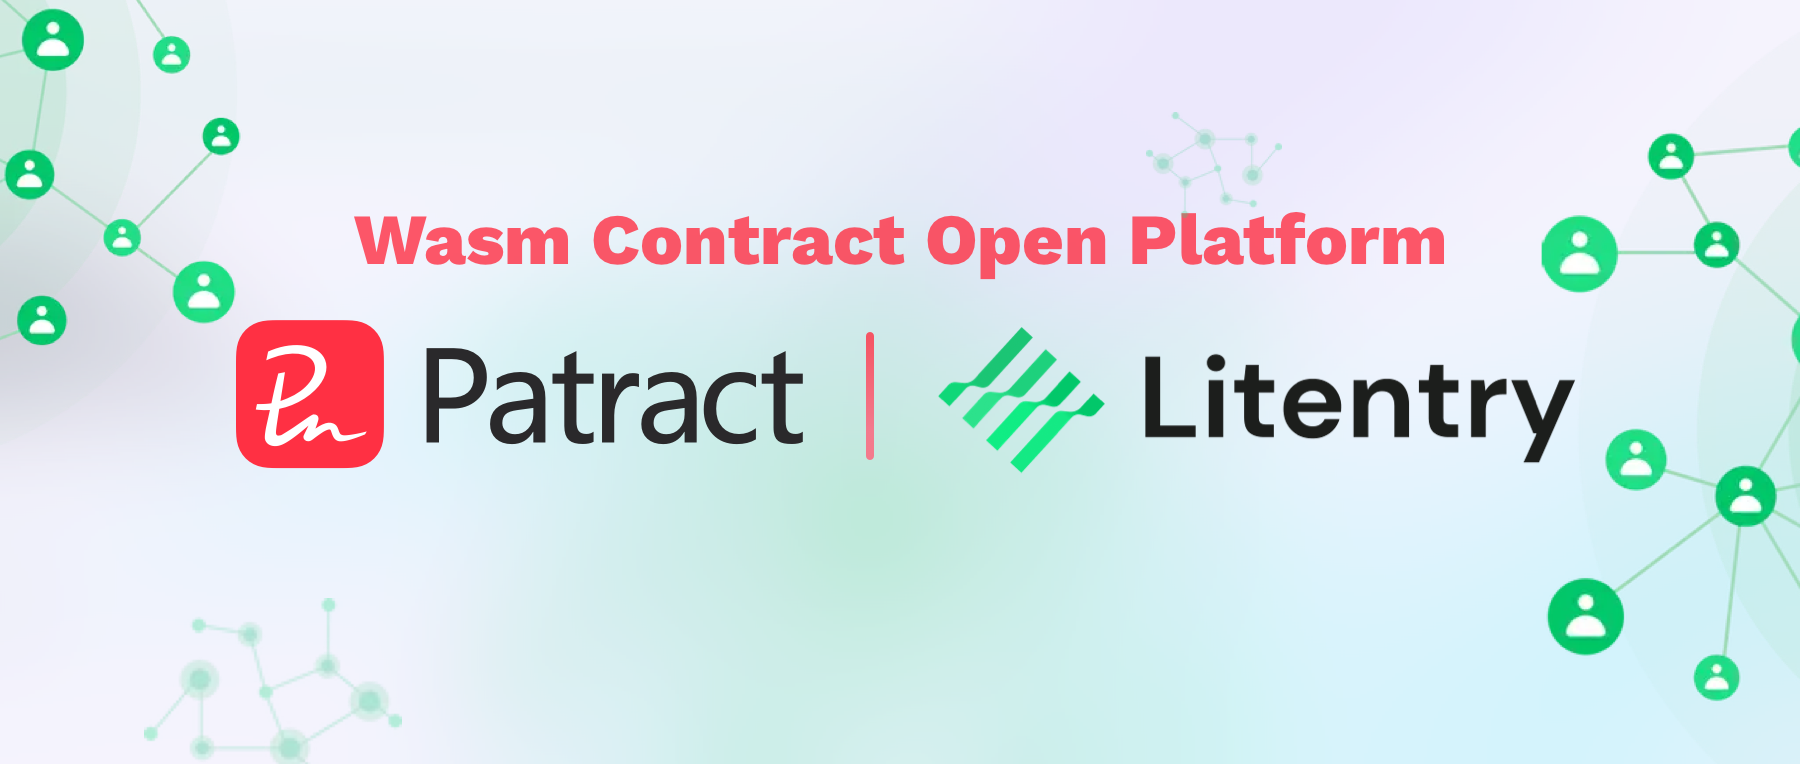 Litentry基于Patract的Redspot和Europa产品进行ink!合约开发，拓展身份服务生态